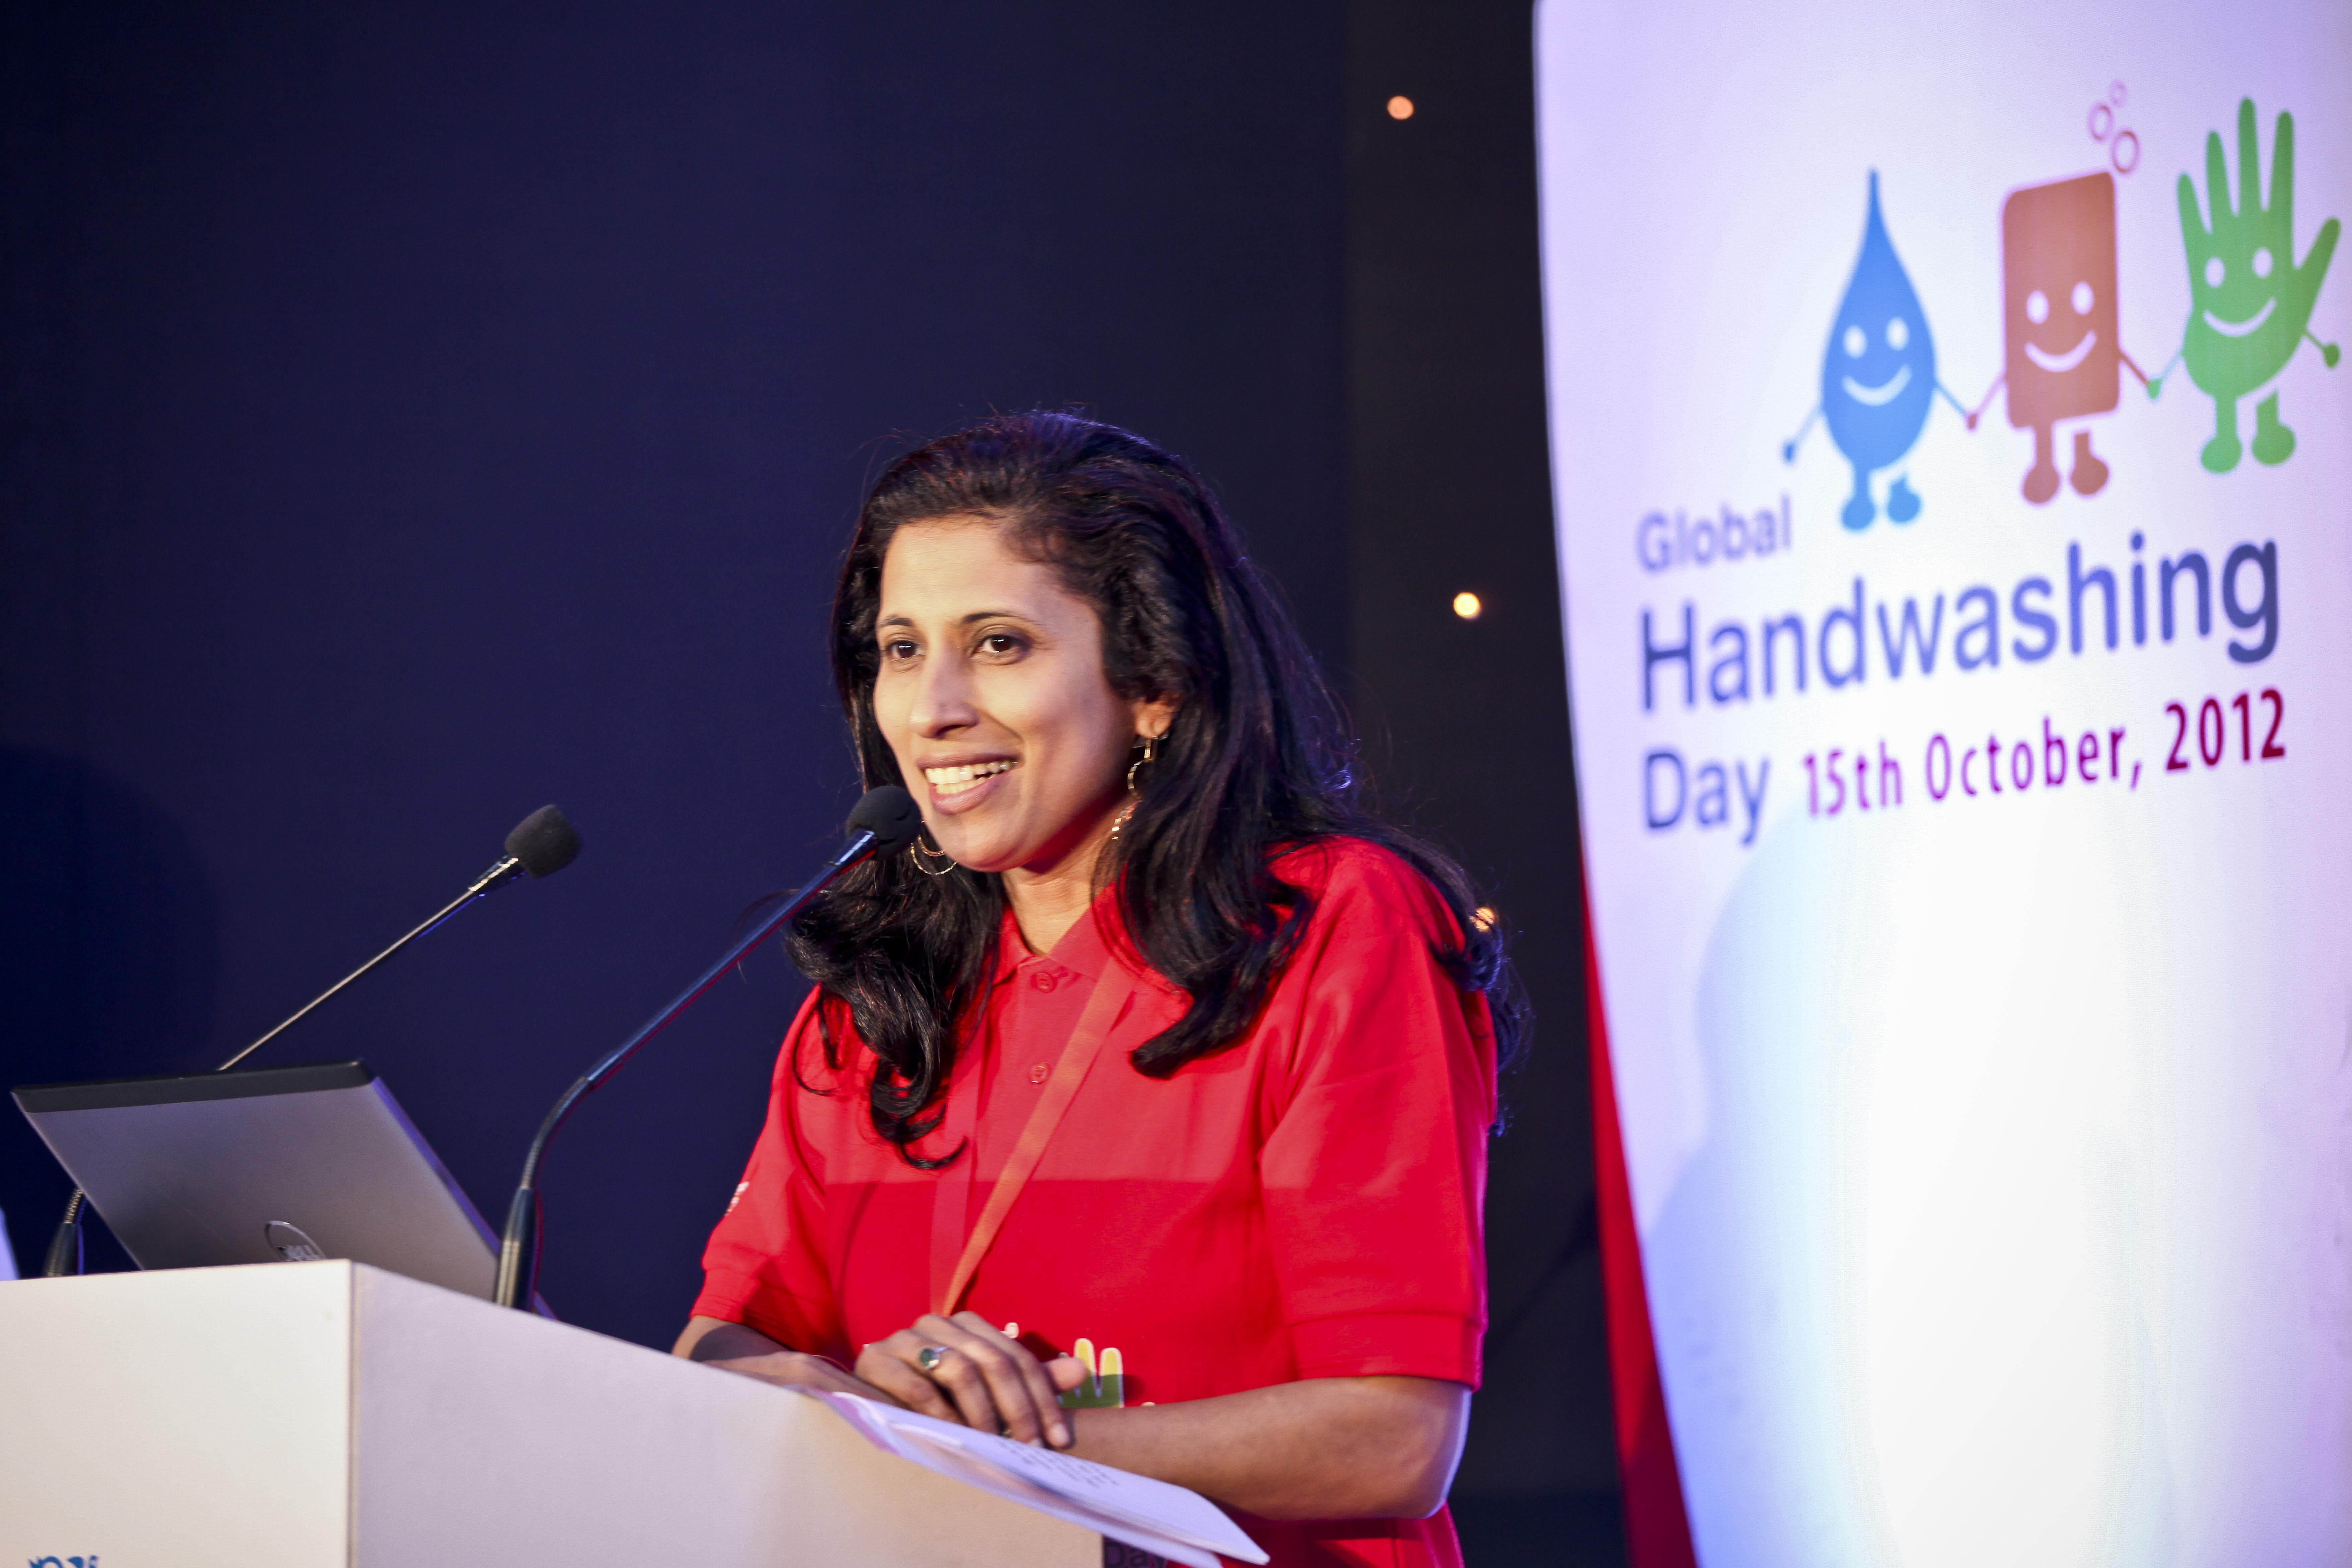 Executive Director HR of Unilever India Leena Nair speaks during Global Handwashing Day at Worli Seaface Mumbai Municipal Corporation School on Oct. 15, 2012, in Mumbai, India.